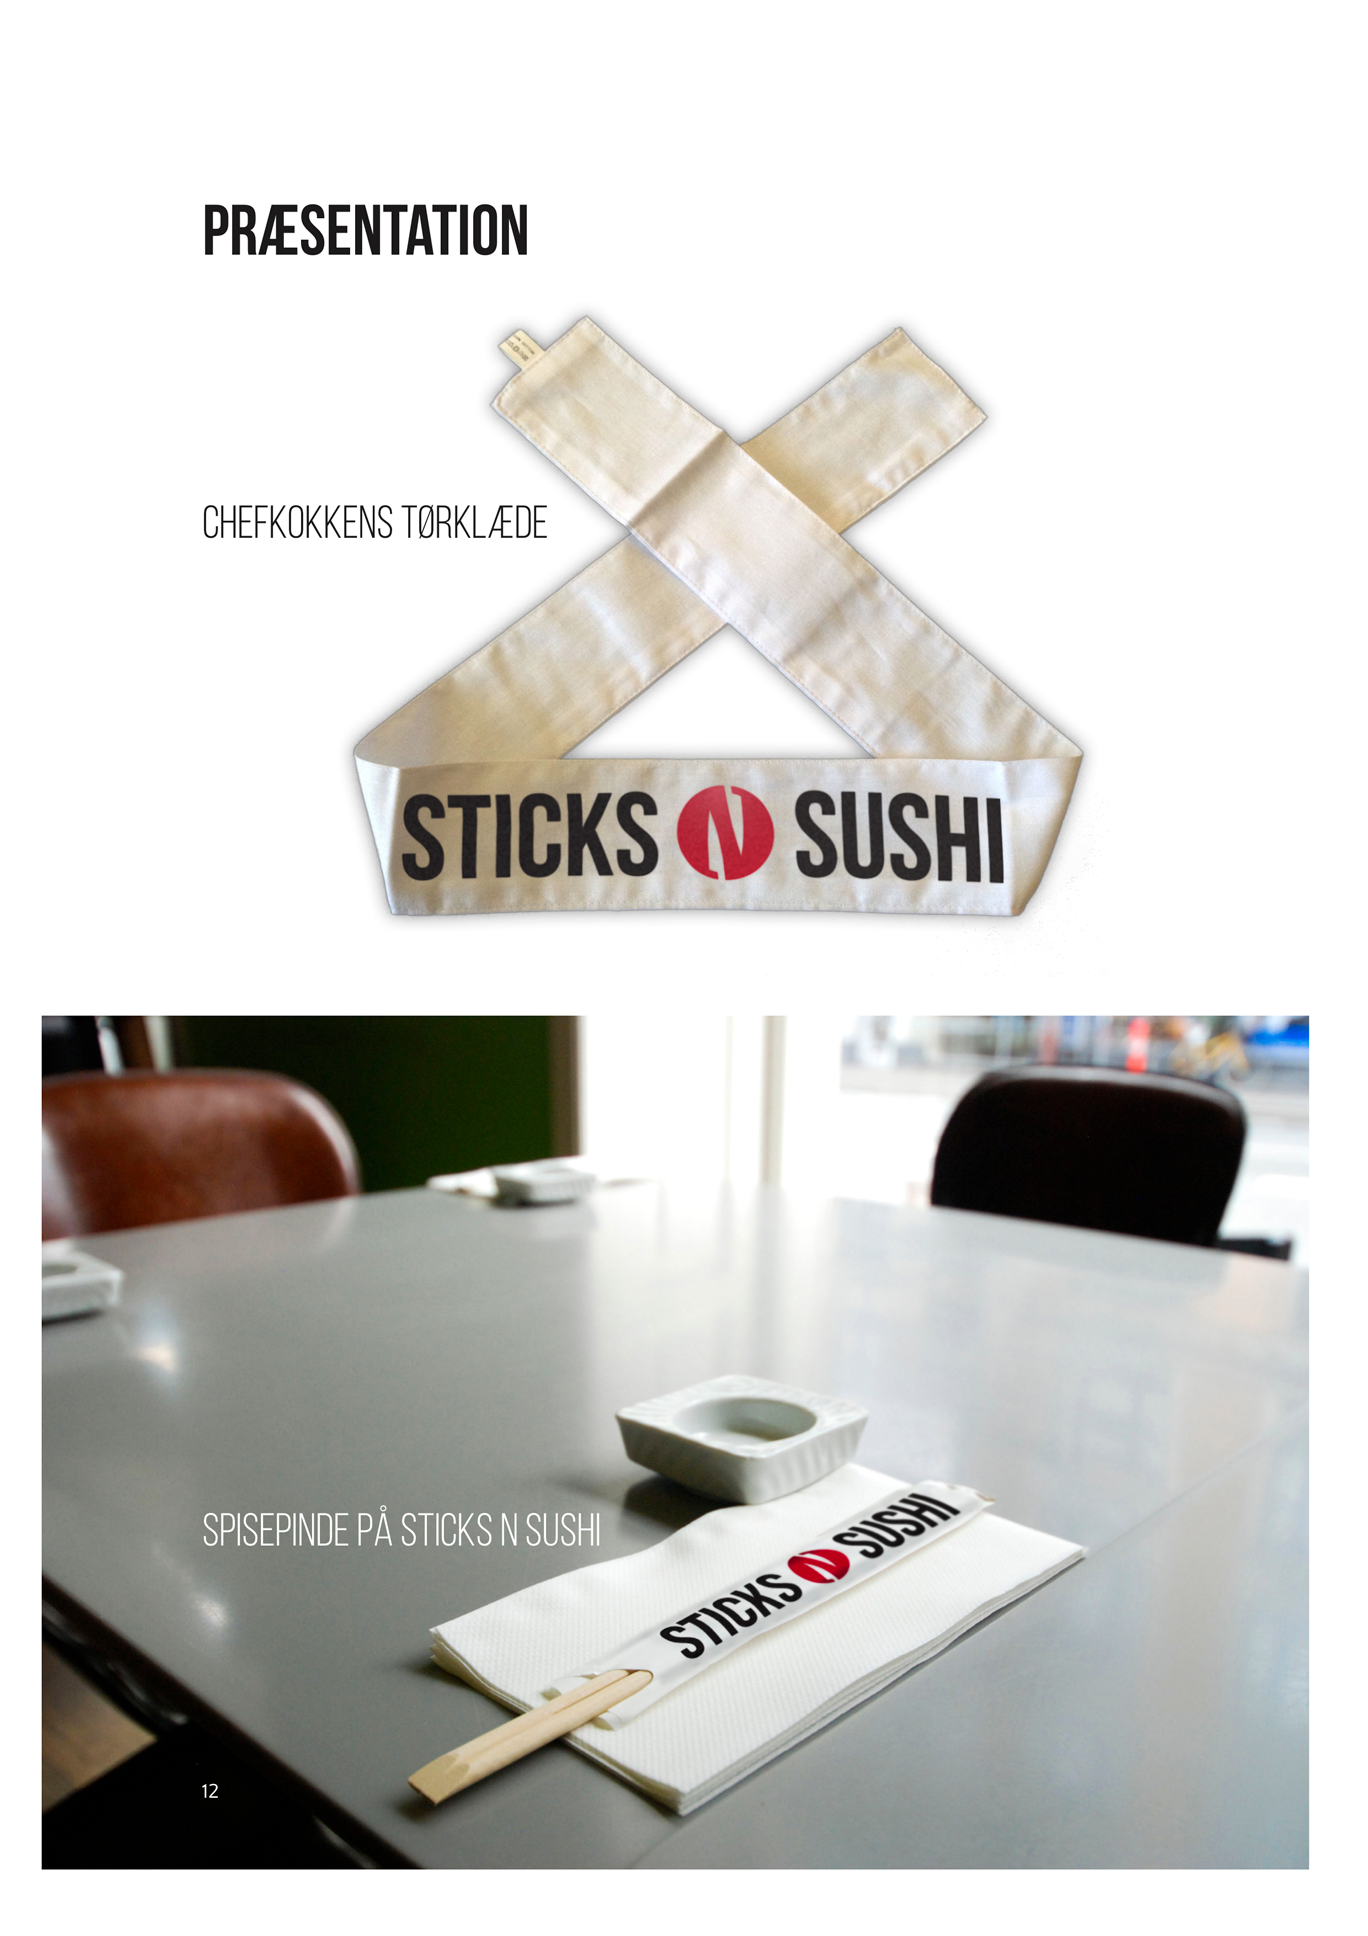 sticks-n-sushi-presentation